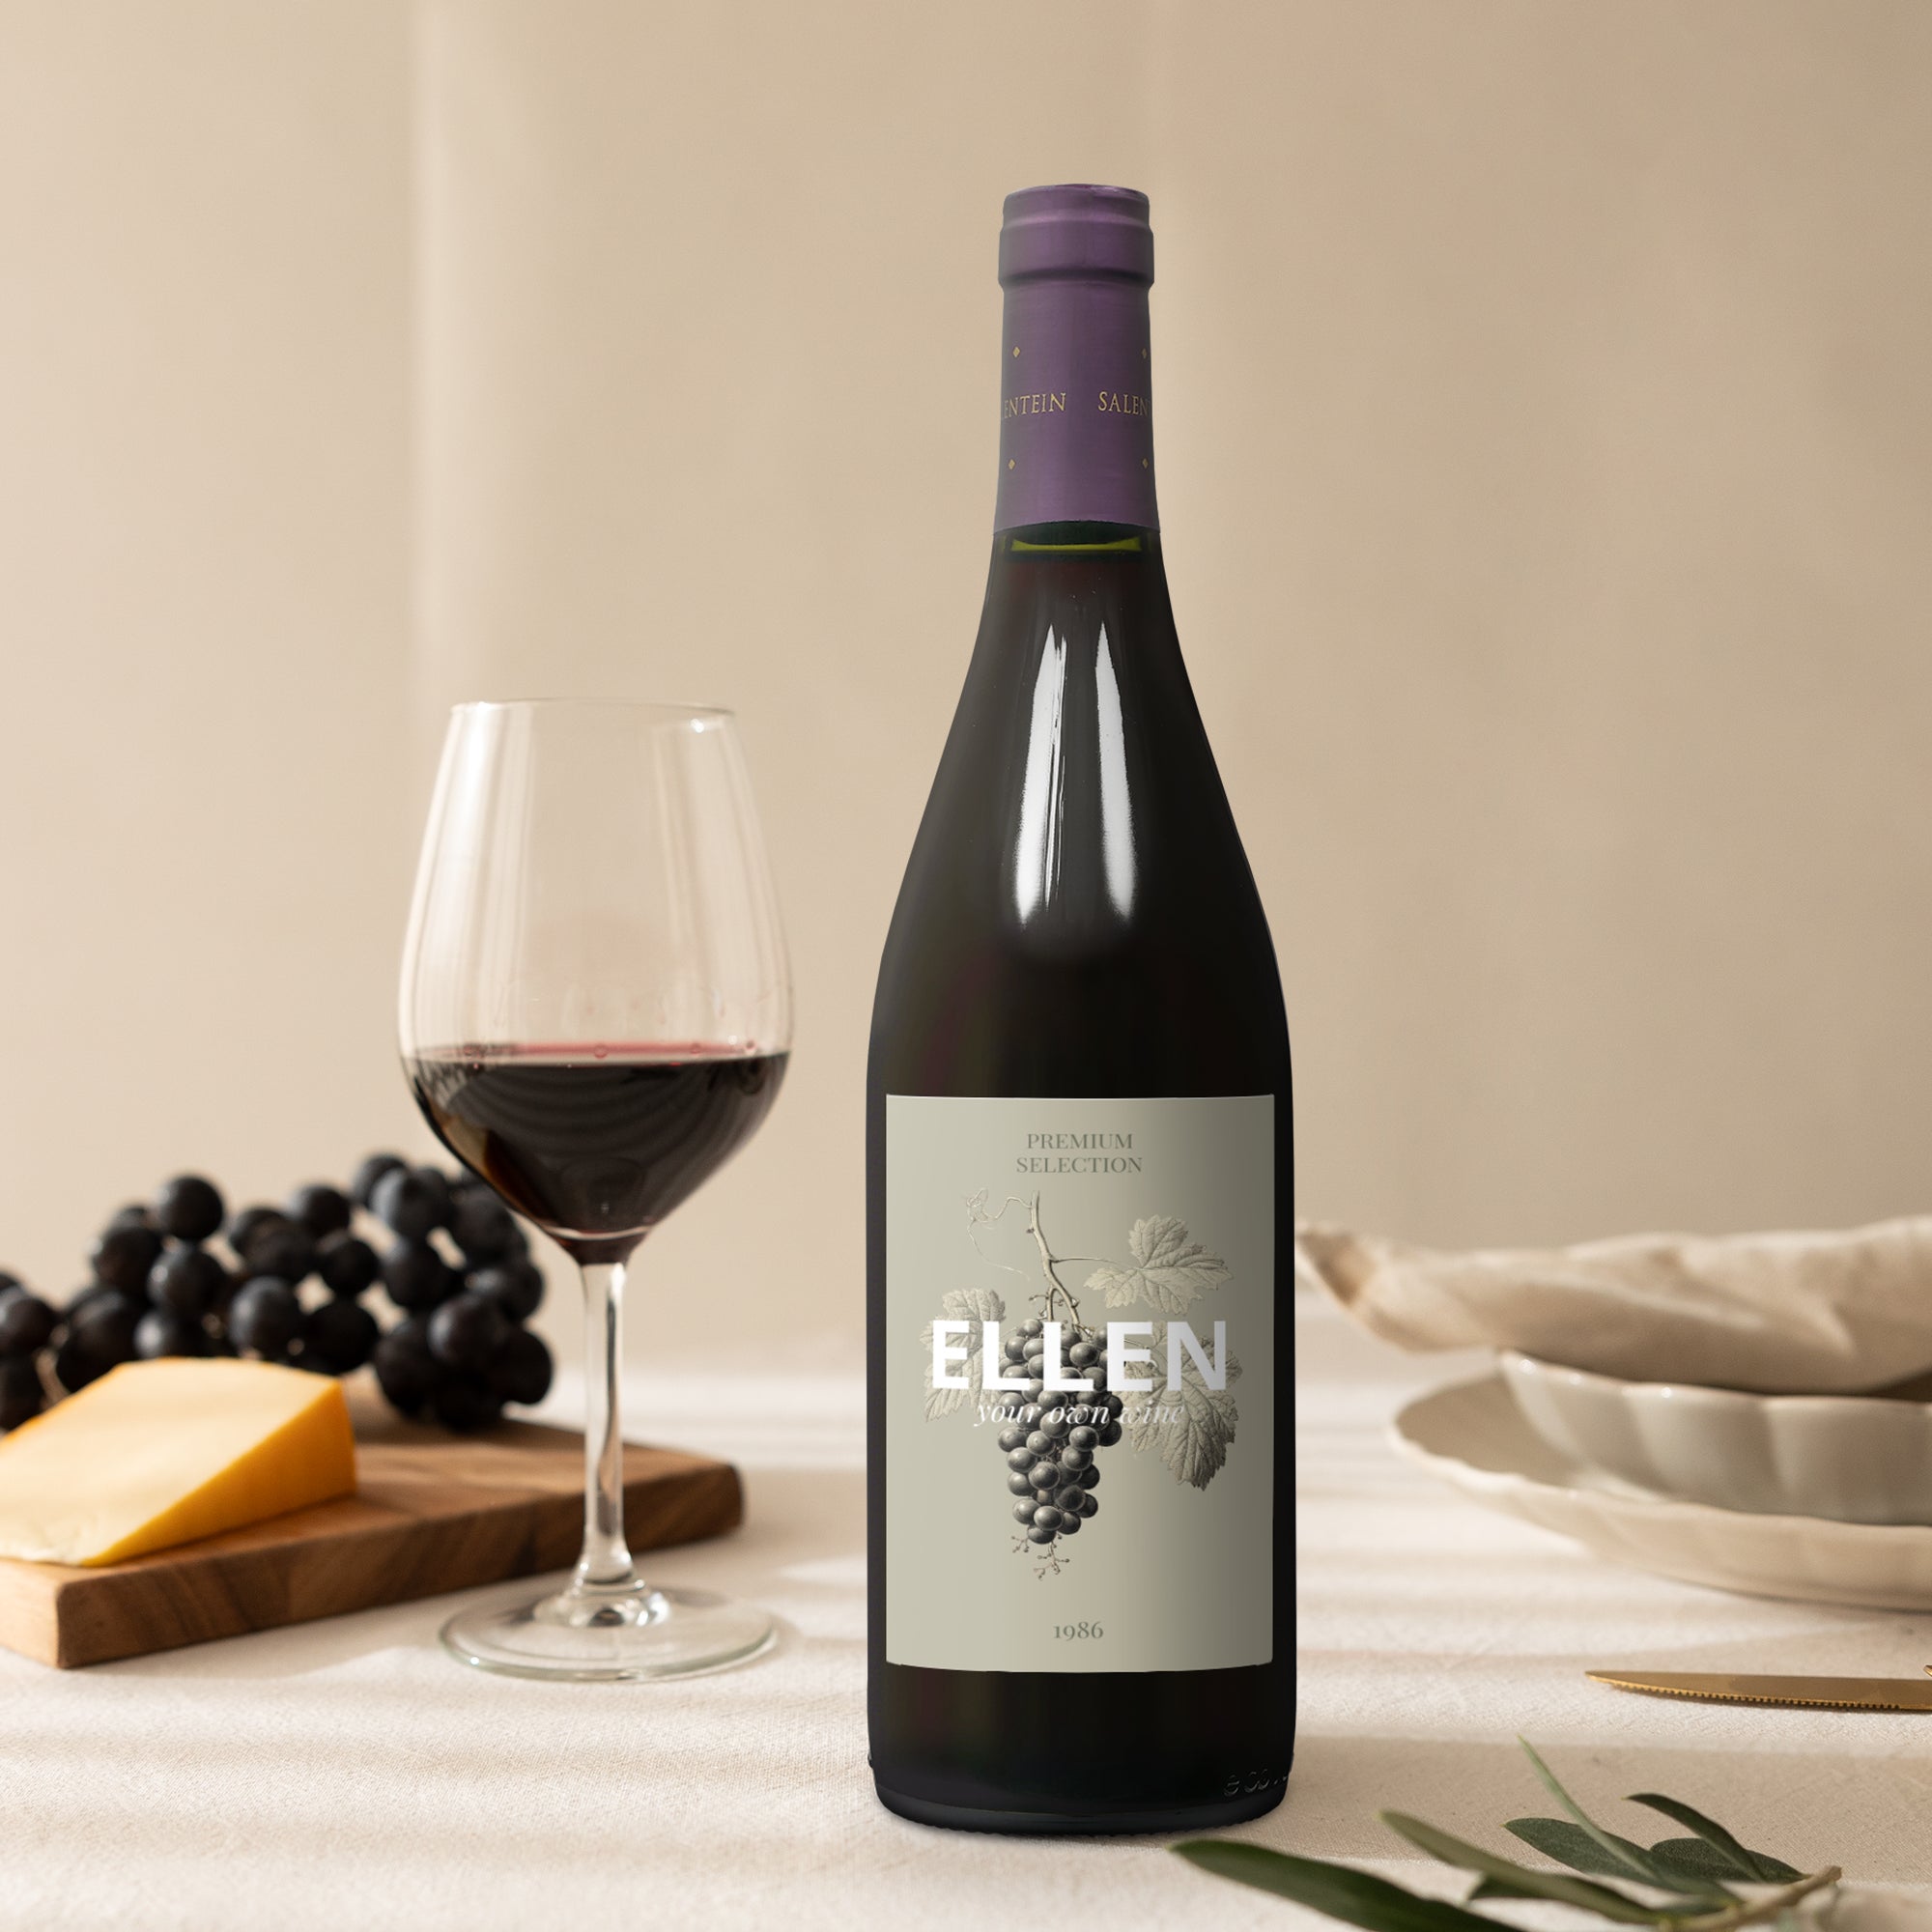 Wino Salentein Pinot Noir ze spersonalizowan etykiet